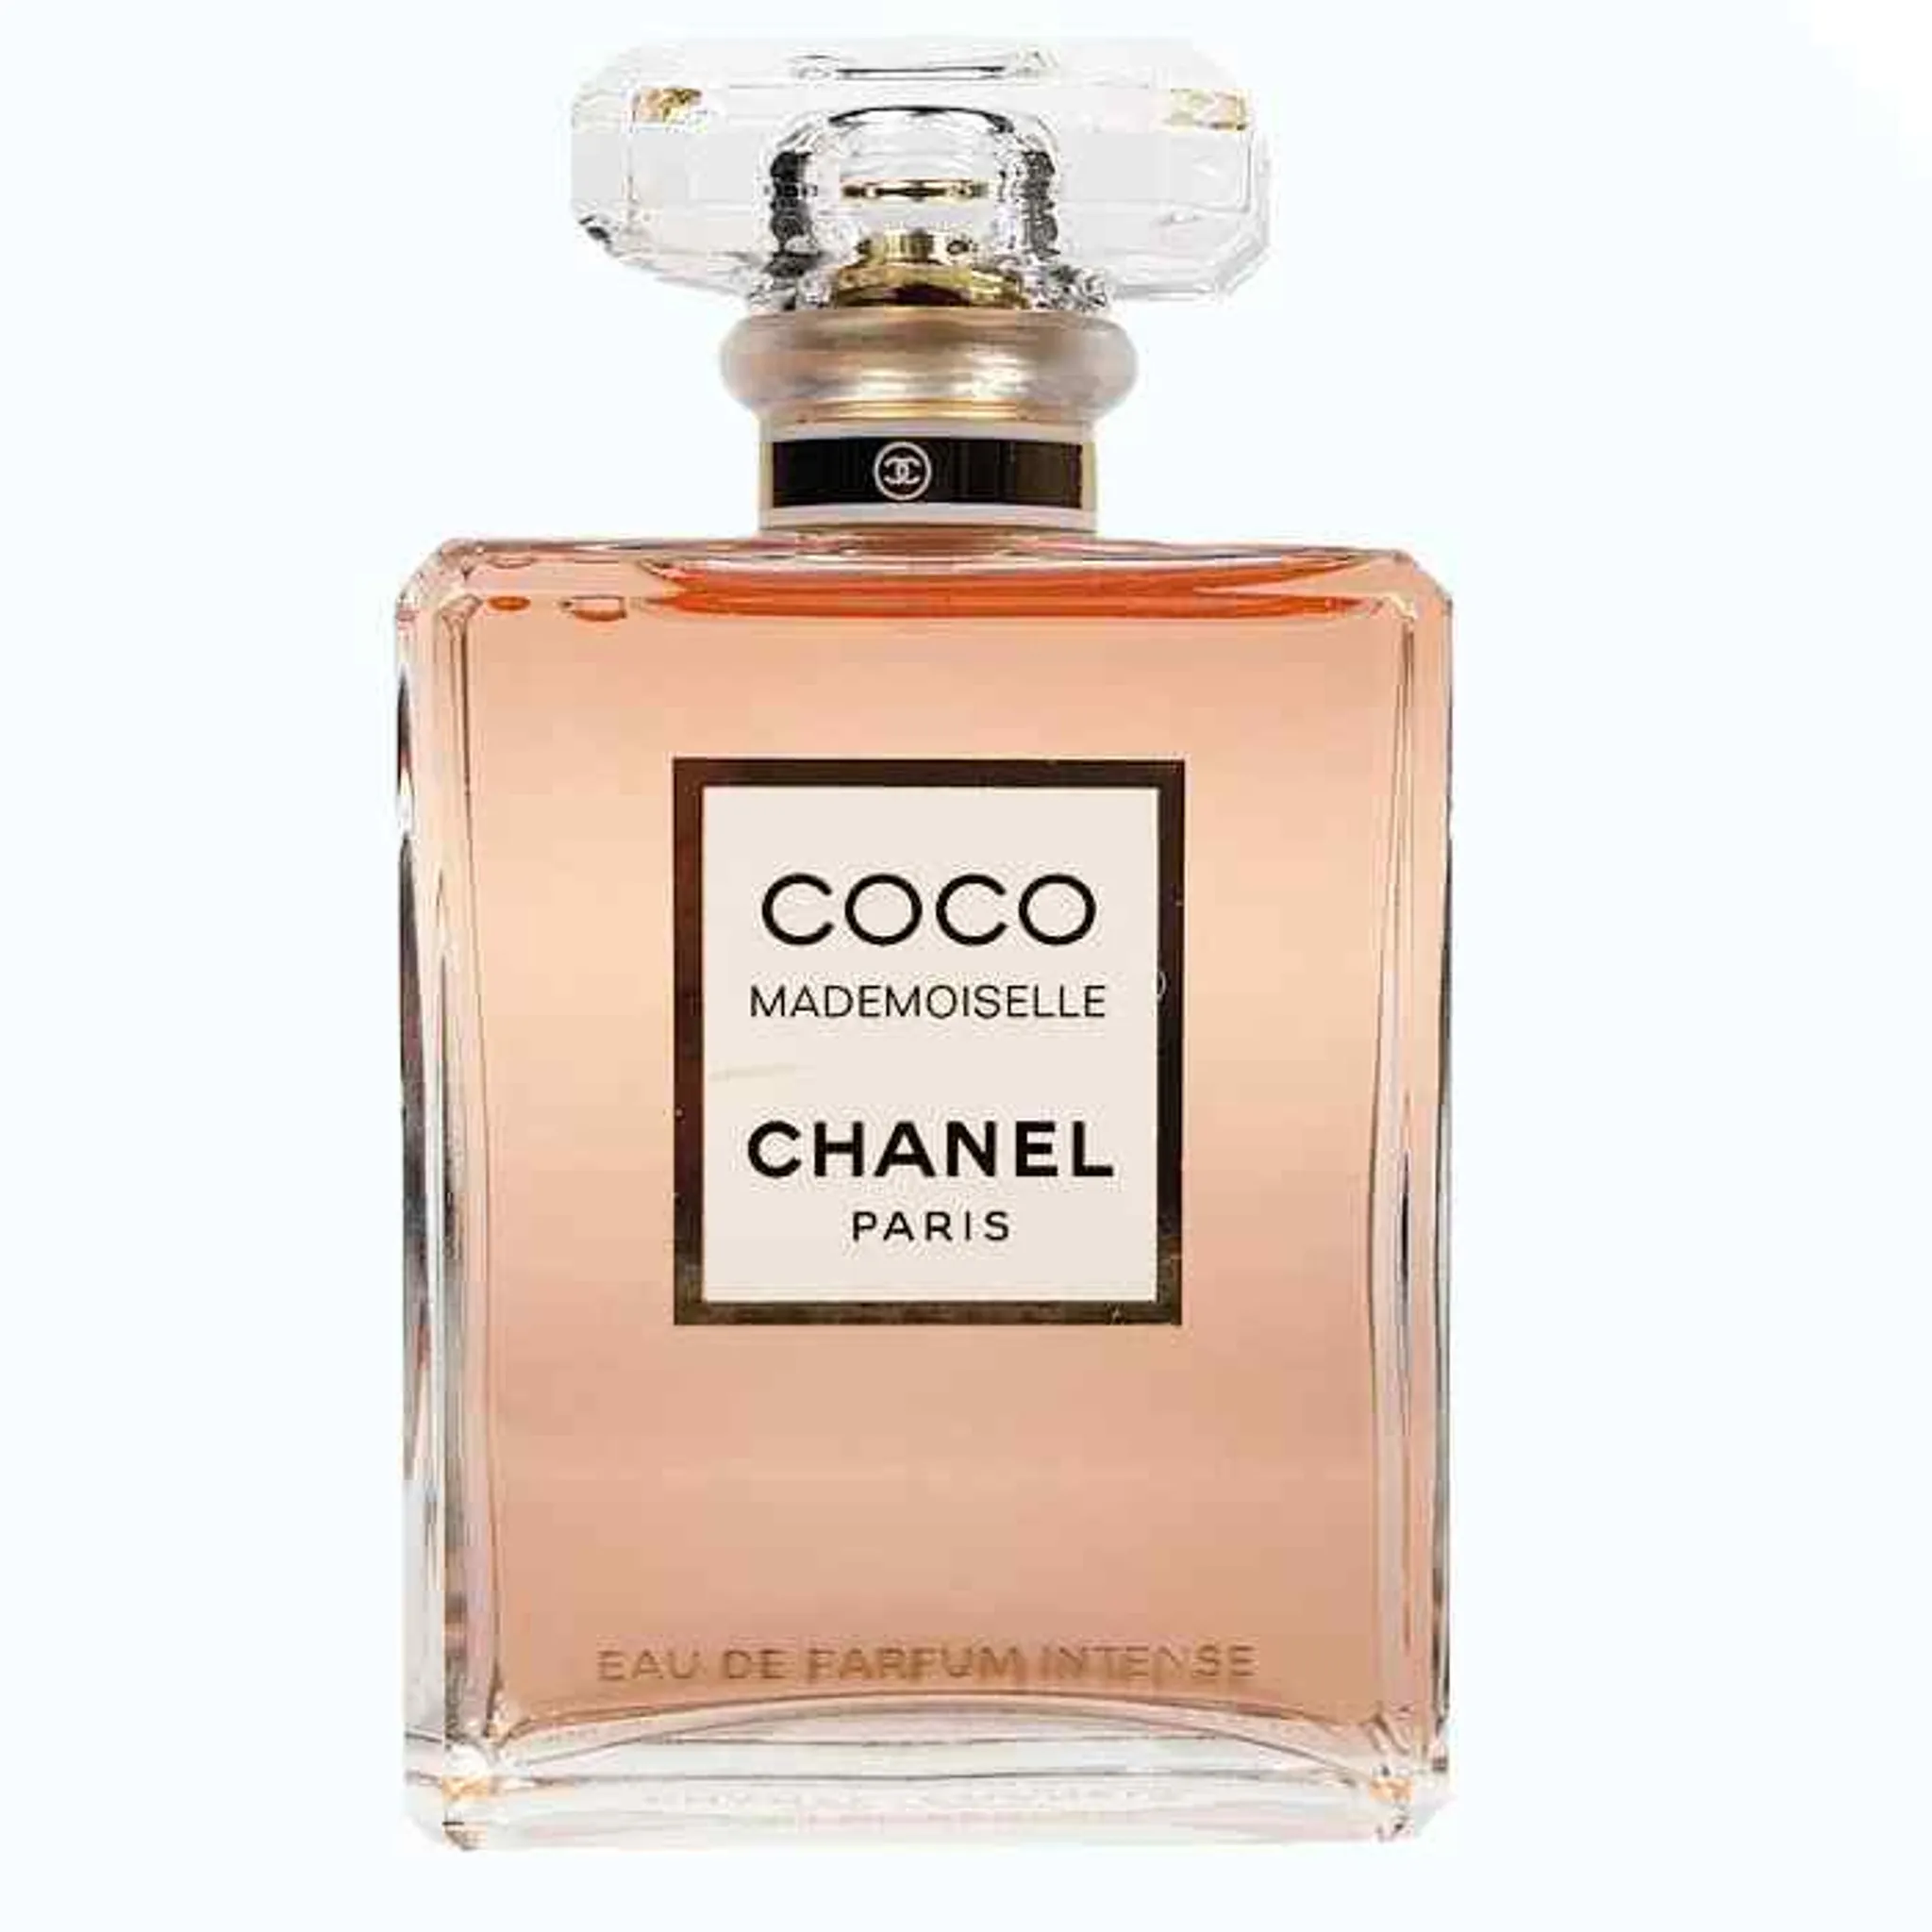 Духи шанель сосо. Коко Шанель мадмуазель 50 мл. Coco Mademoiselle Chanel 100ml. Chanel - Coco Mademoiselle EDP 100мл. Coco Chanel EDP 100 ml.